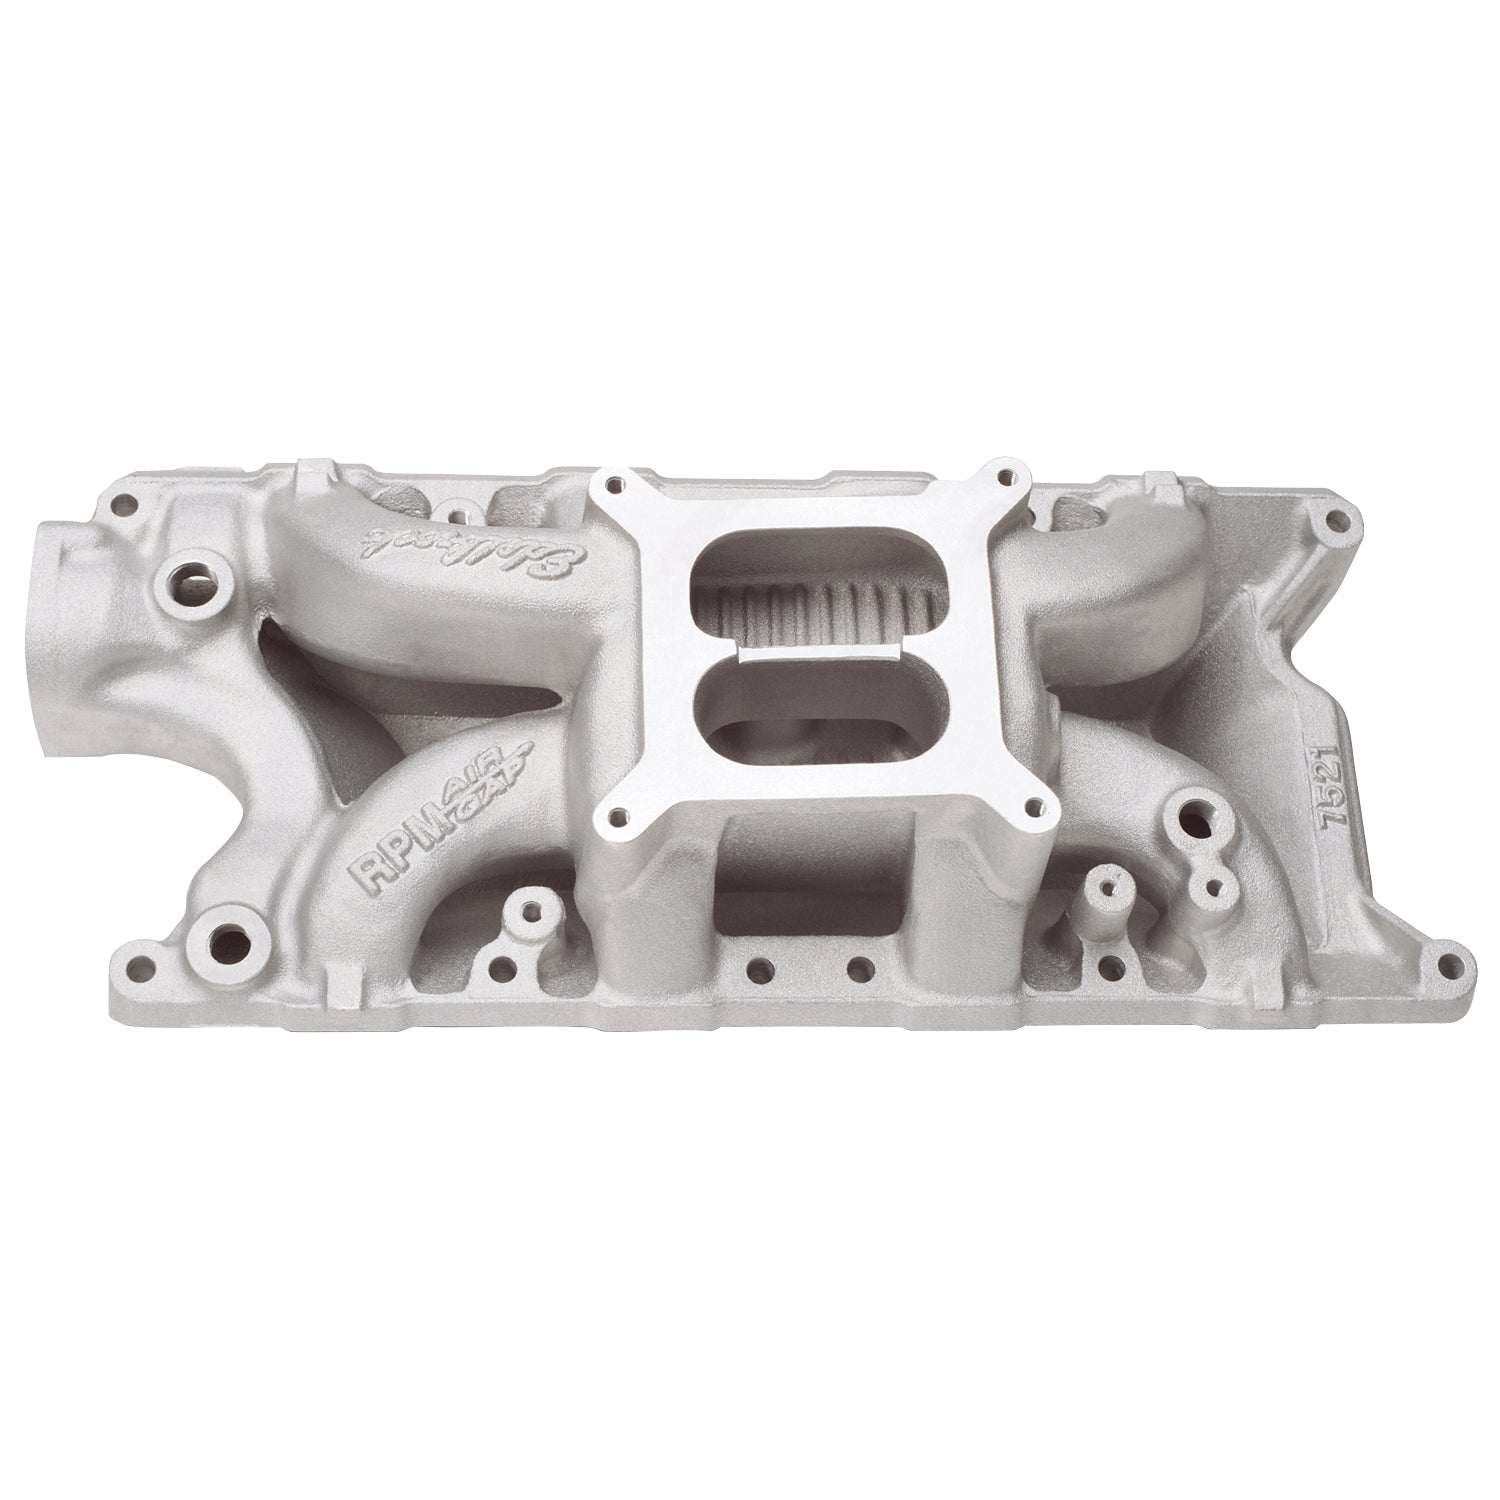 RPM Air-Gap #7521 Intake Manifold for Small-Block Ford 302-331-347 V8